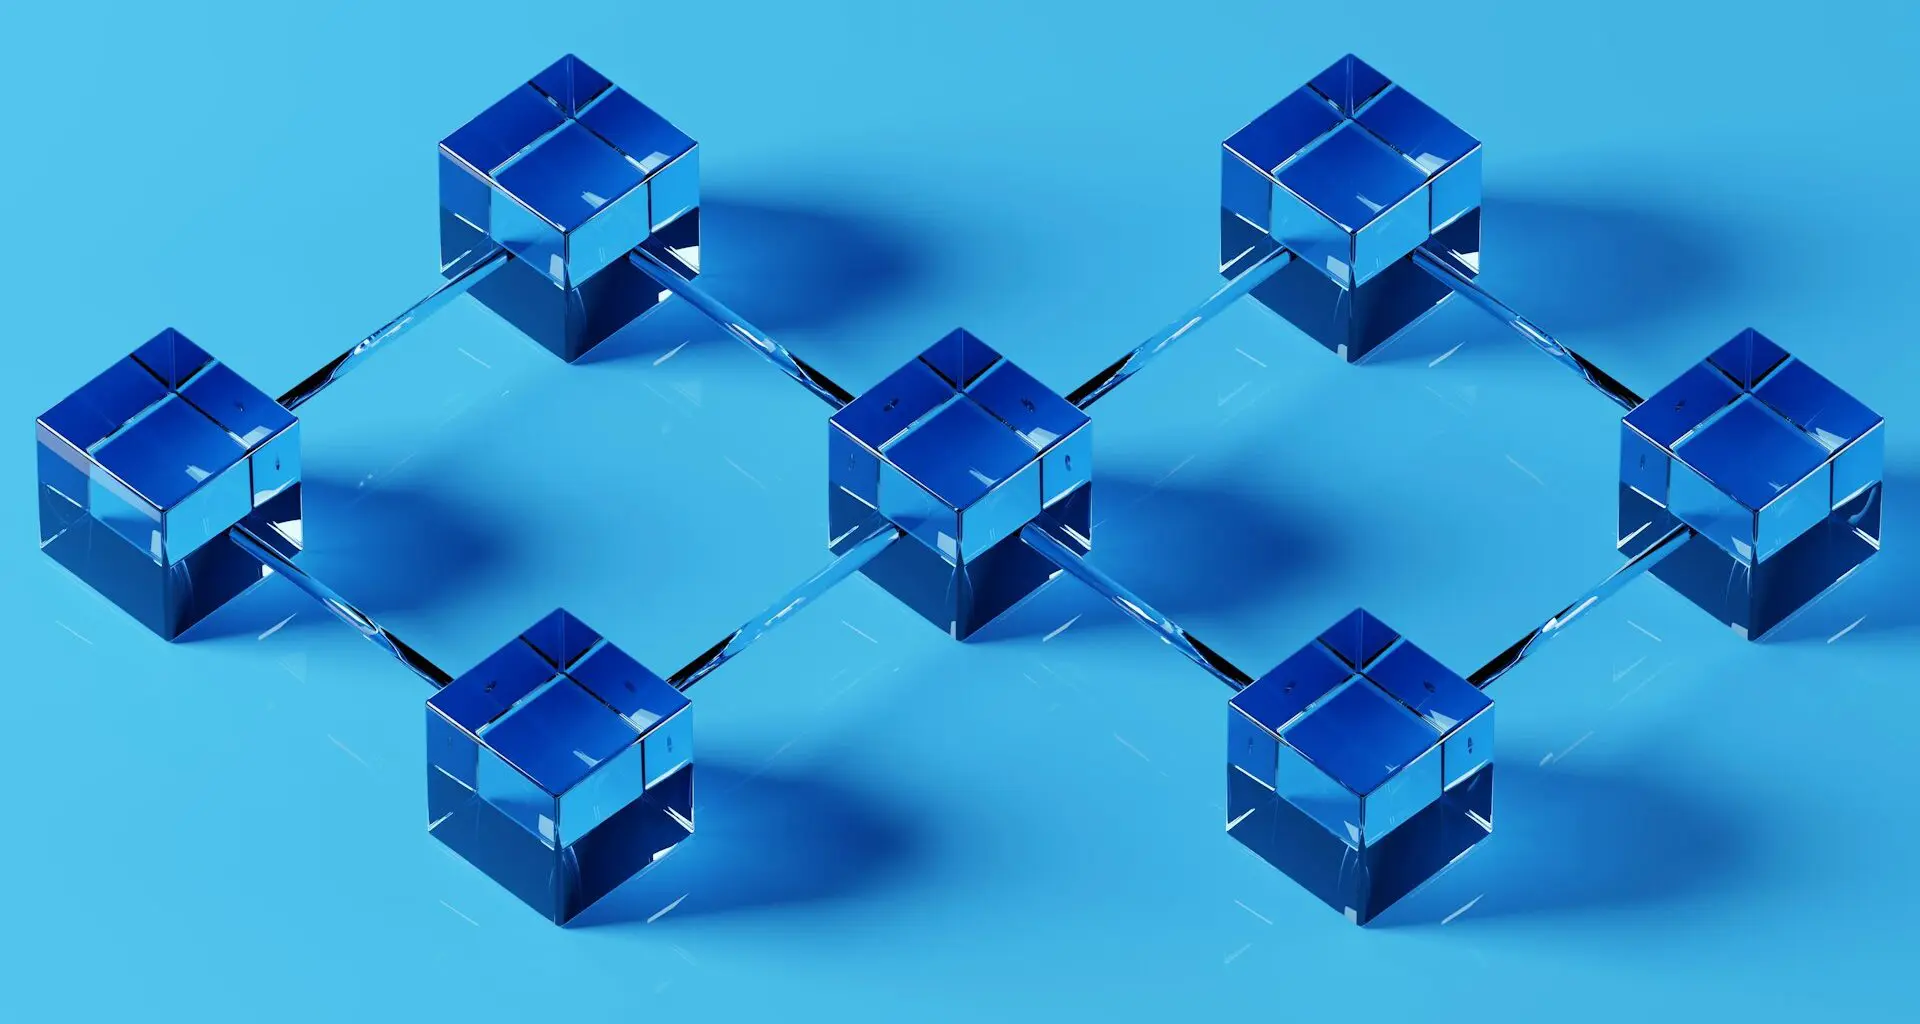 Interconnected blocks representing blockchain consensus